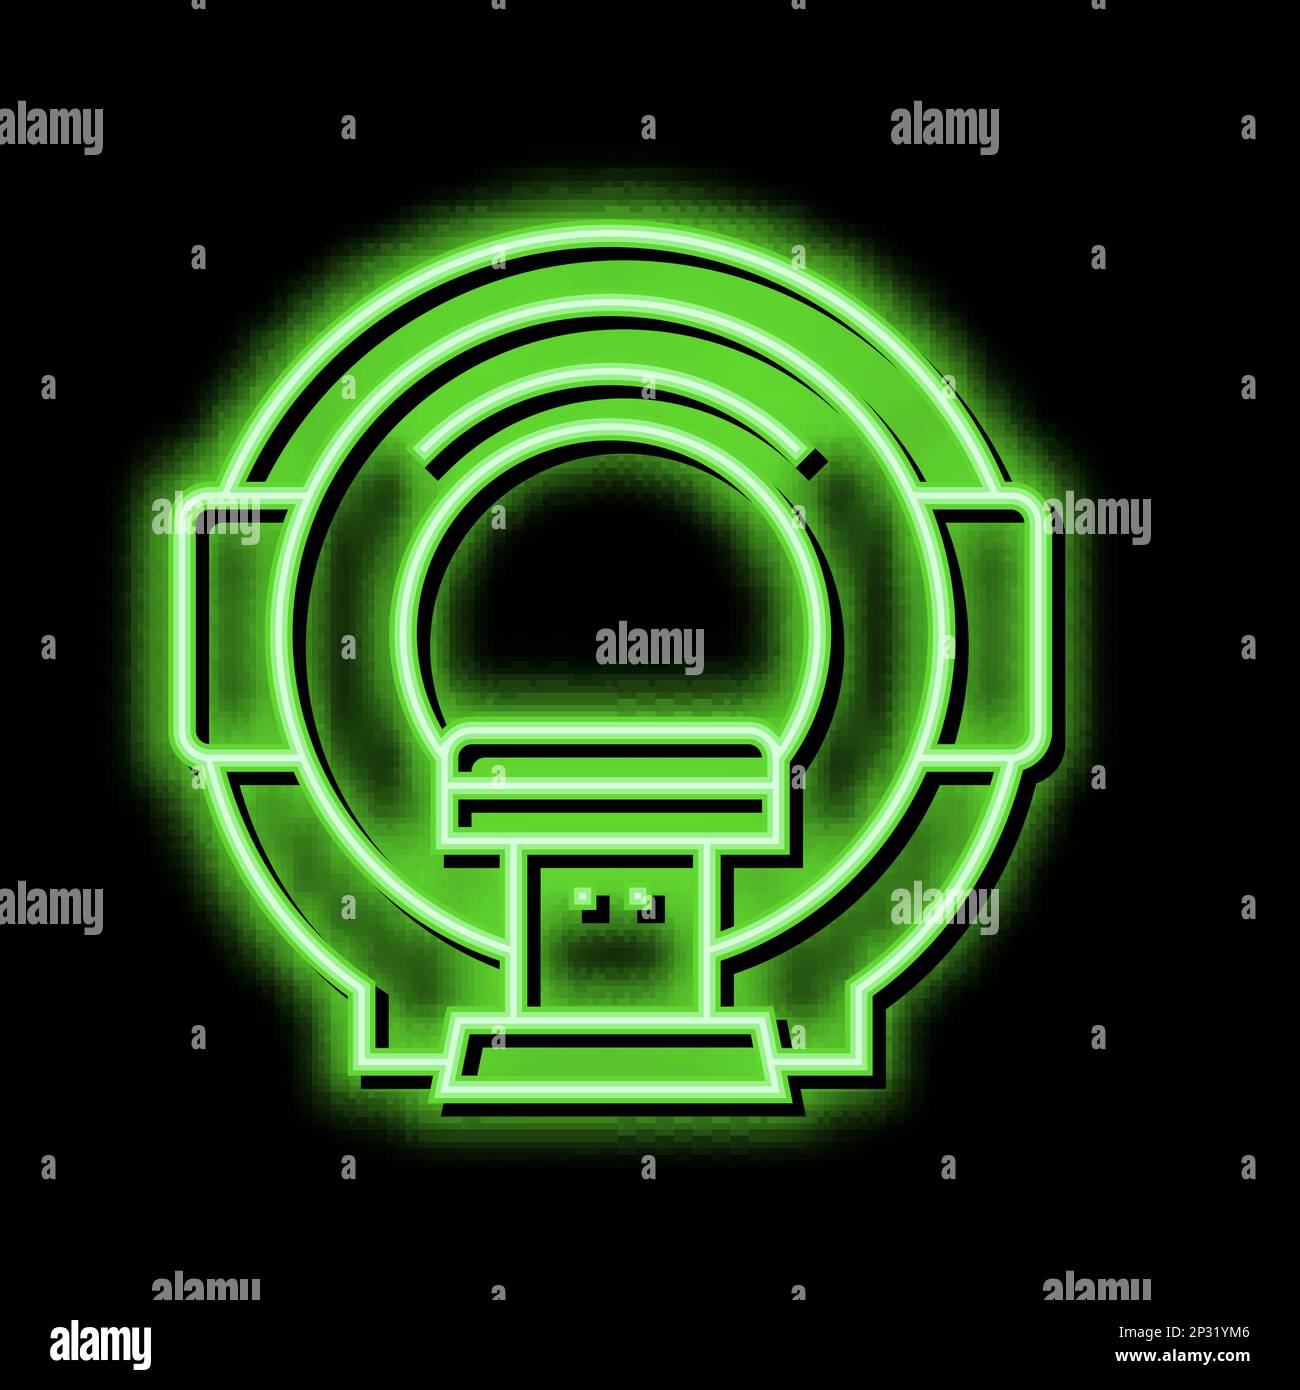 mri radiology equipment neon glow icon illustration Stock Vector